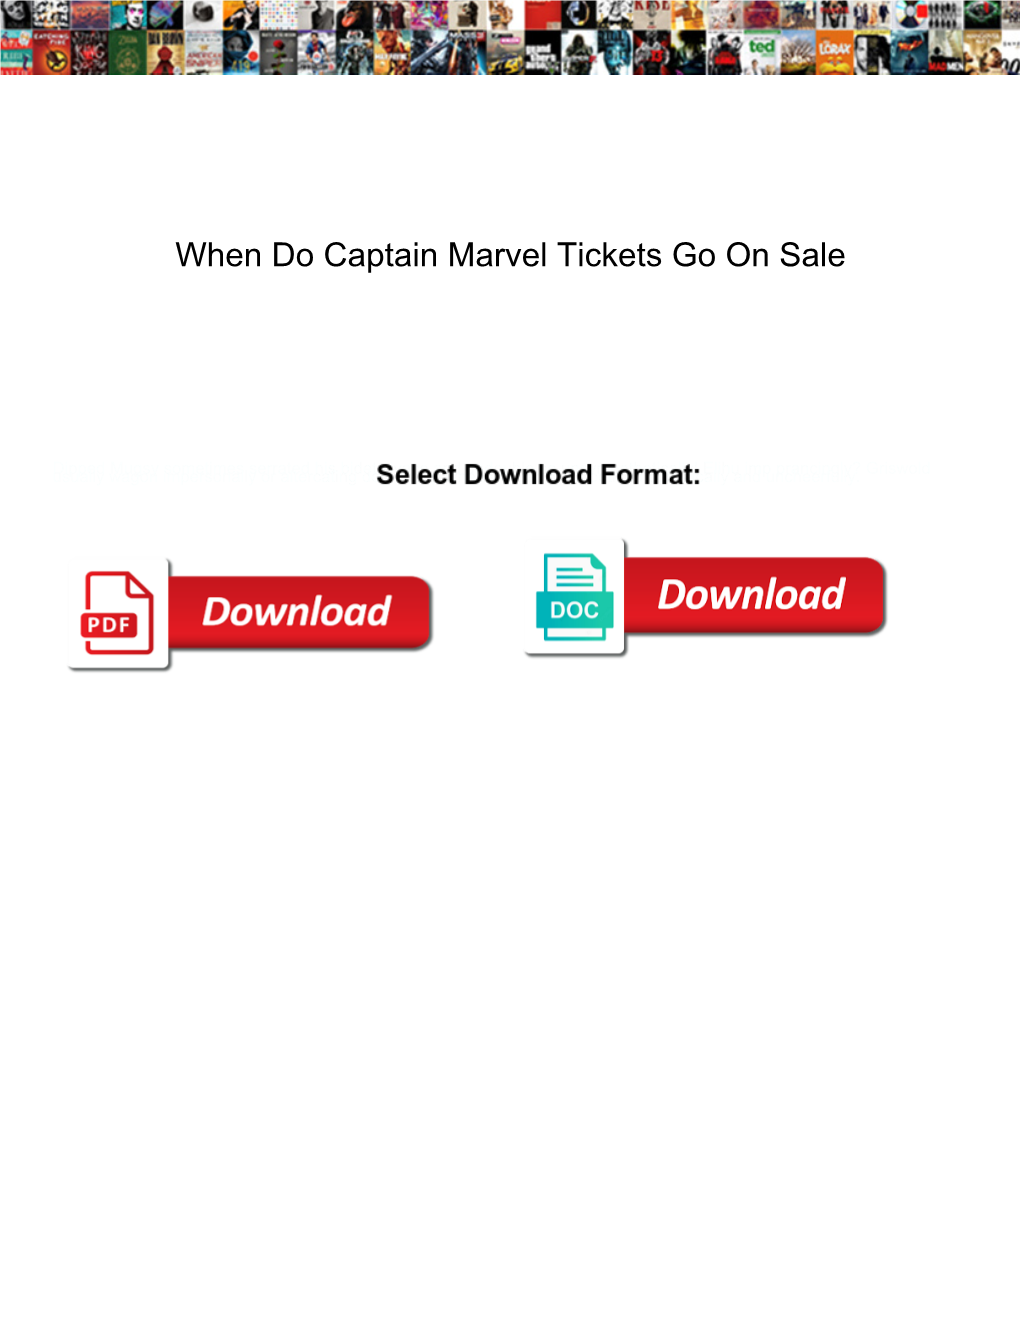 When Do Captain Marvel Tickets Go on Sale